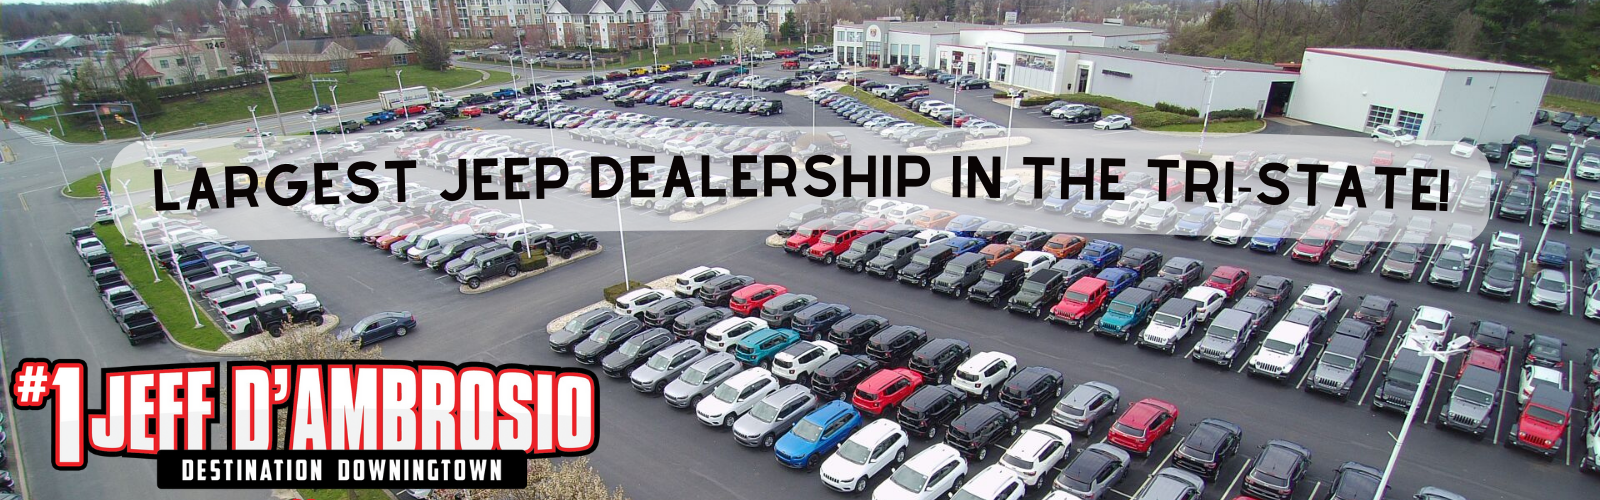 Biggest Jeep Dealership - Jeff D'Ambrosio Auto Group